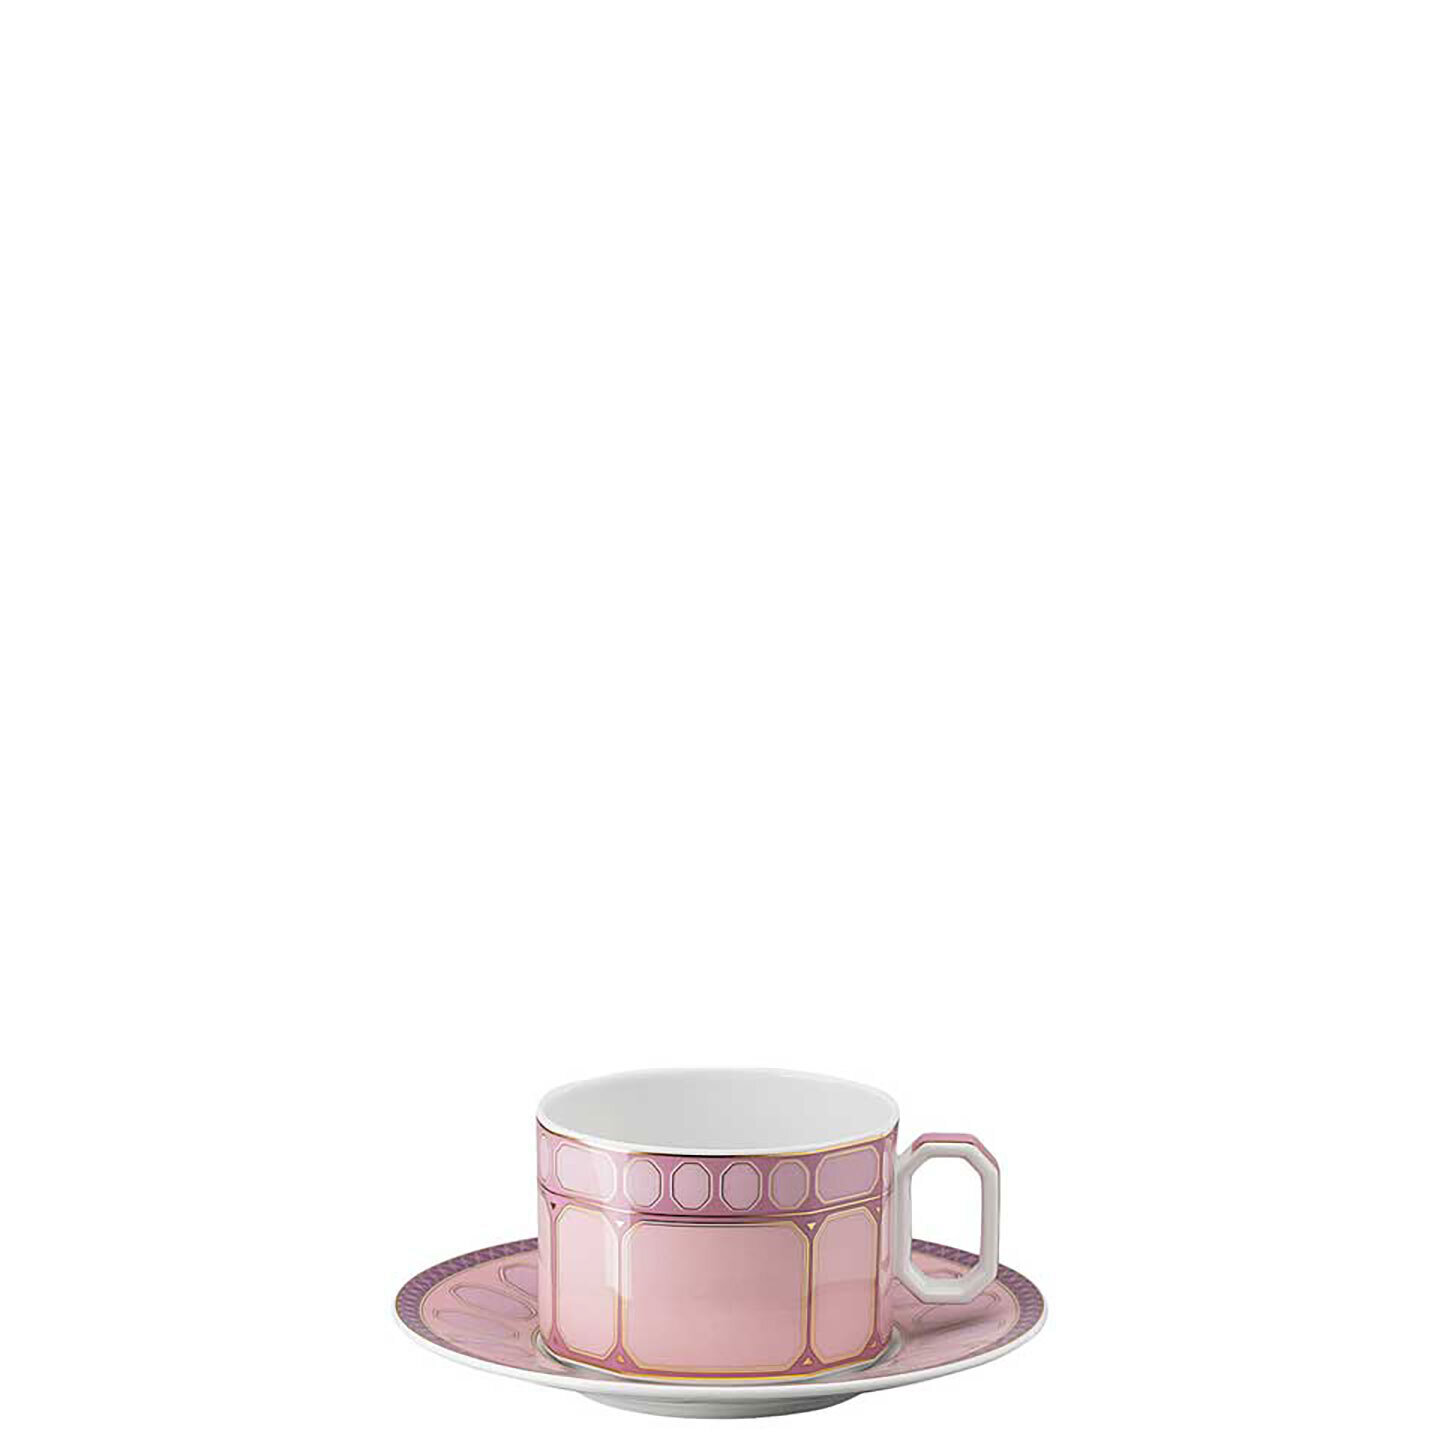 Rosenthal Swarovski Signum Tea Cup 8 oz & Saucer 6 Inch Rose Pink 10570-426350-14640